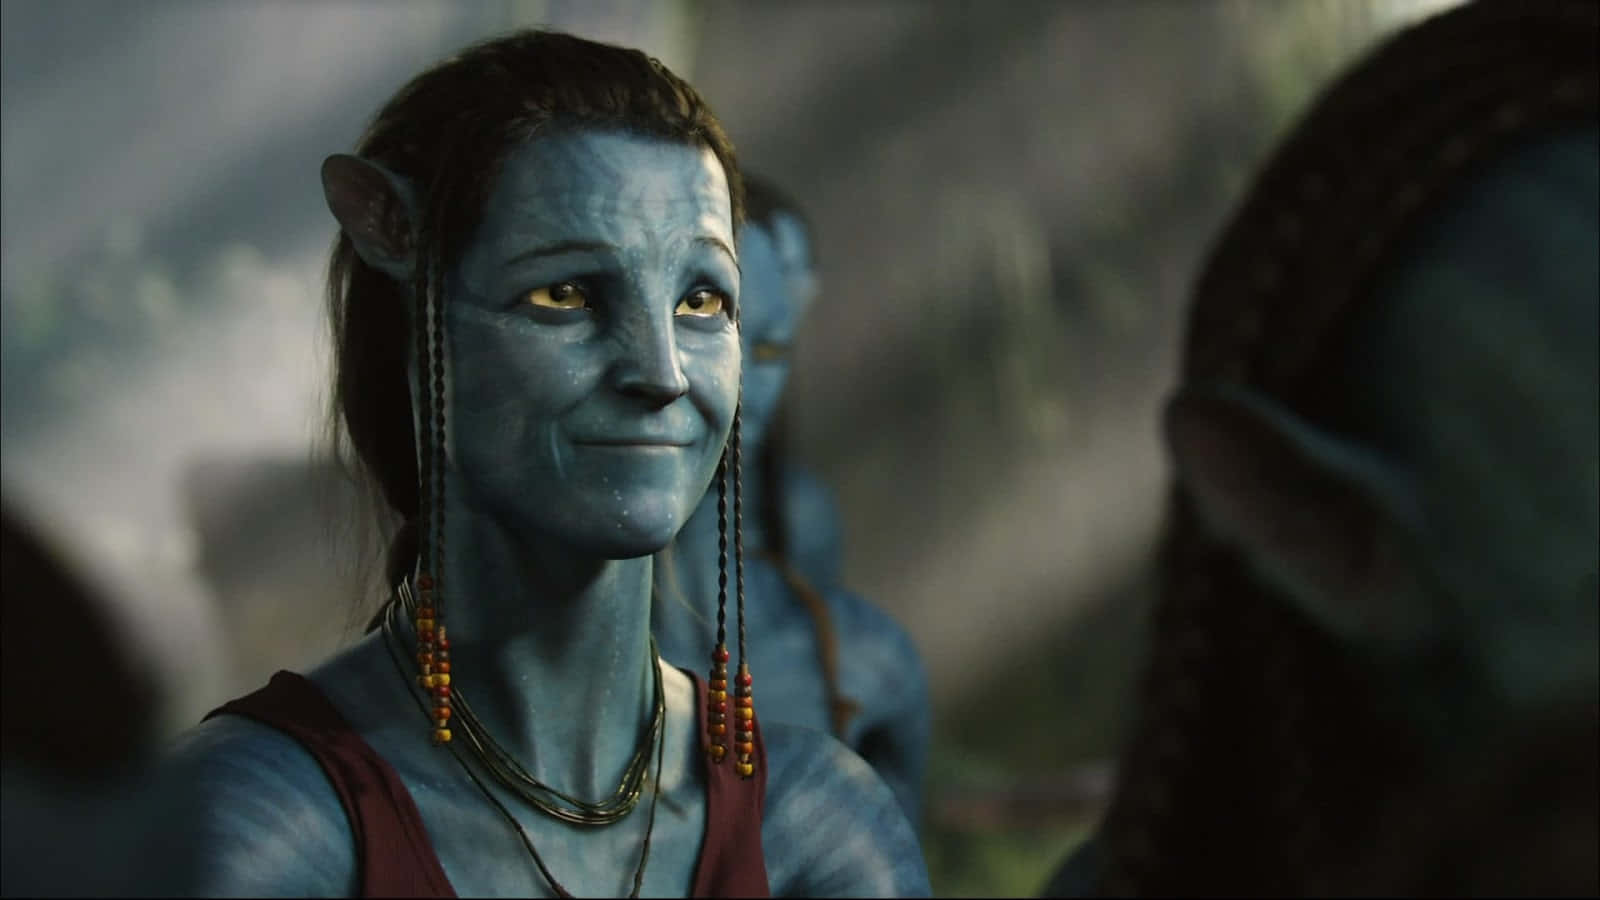 Explore the beautiful, strange world of Pandora in Avatar